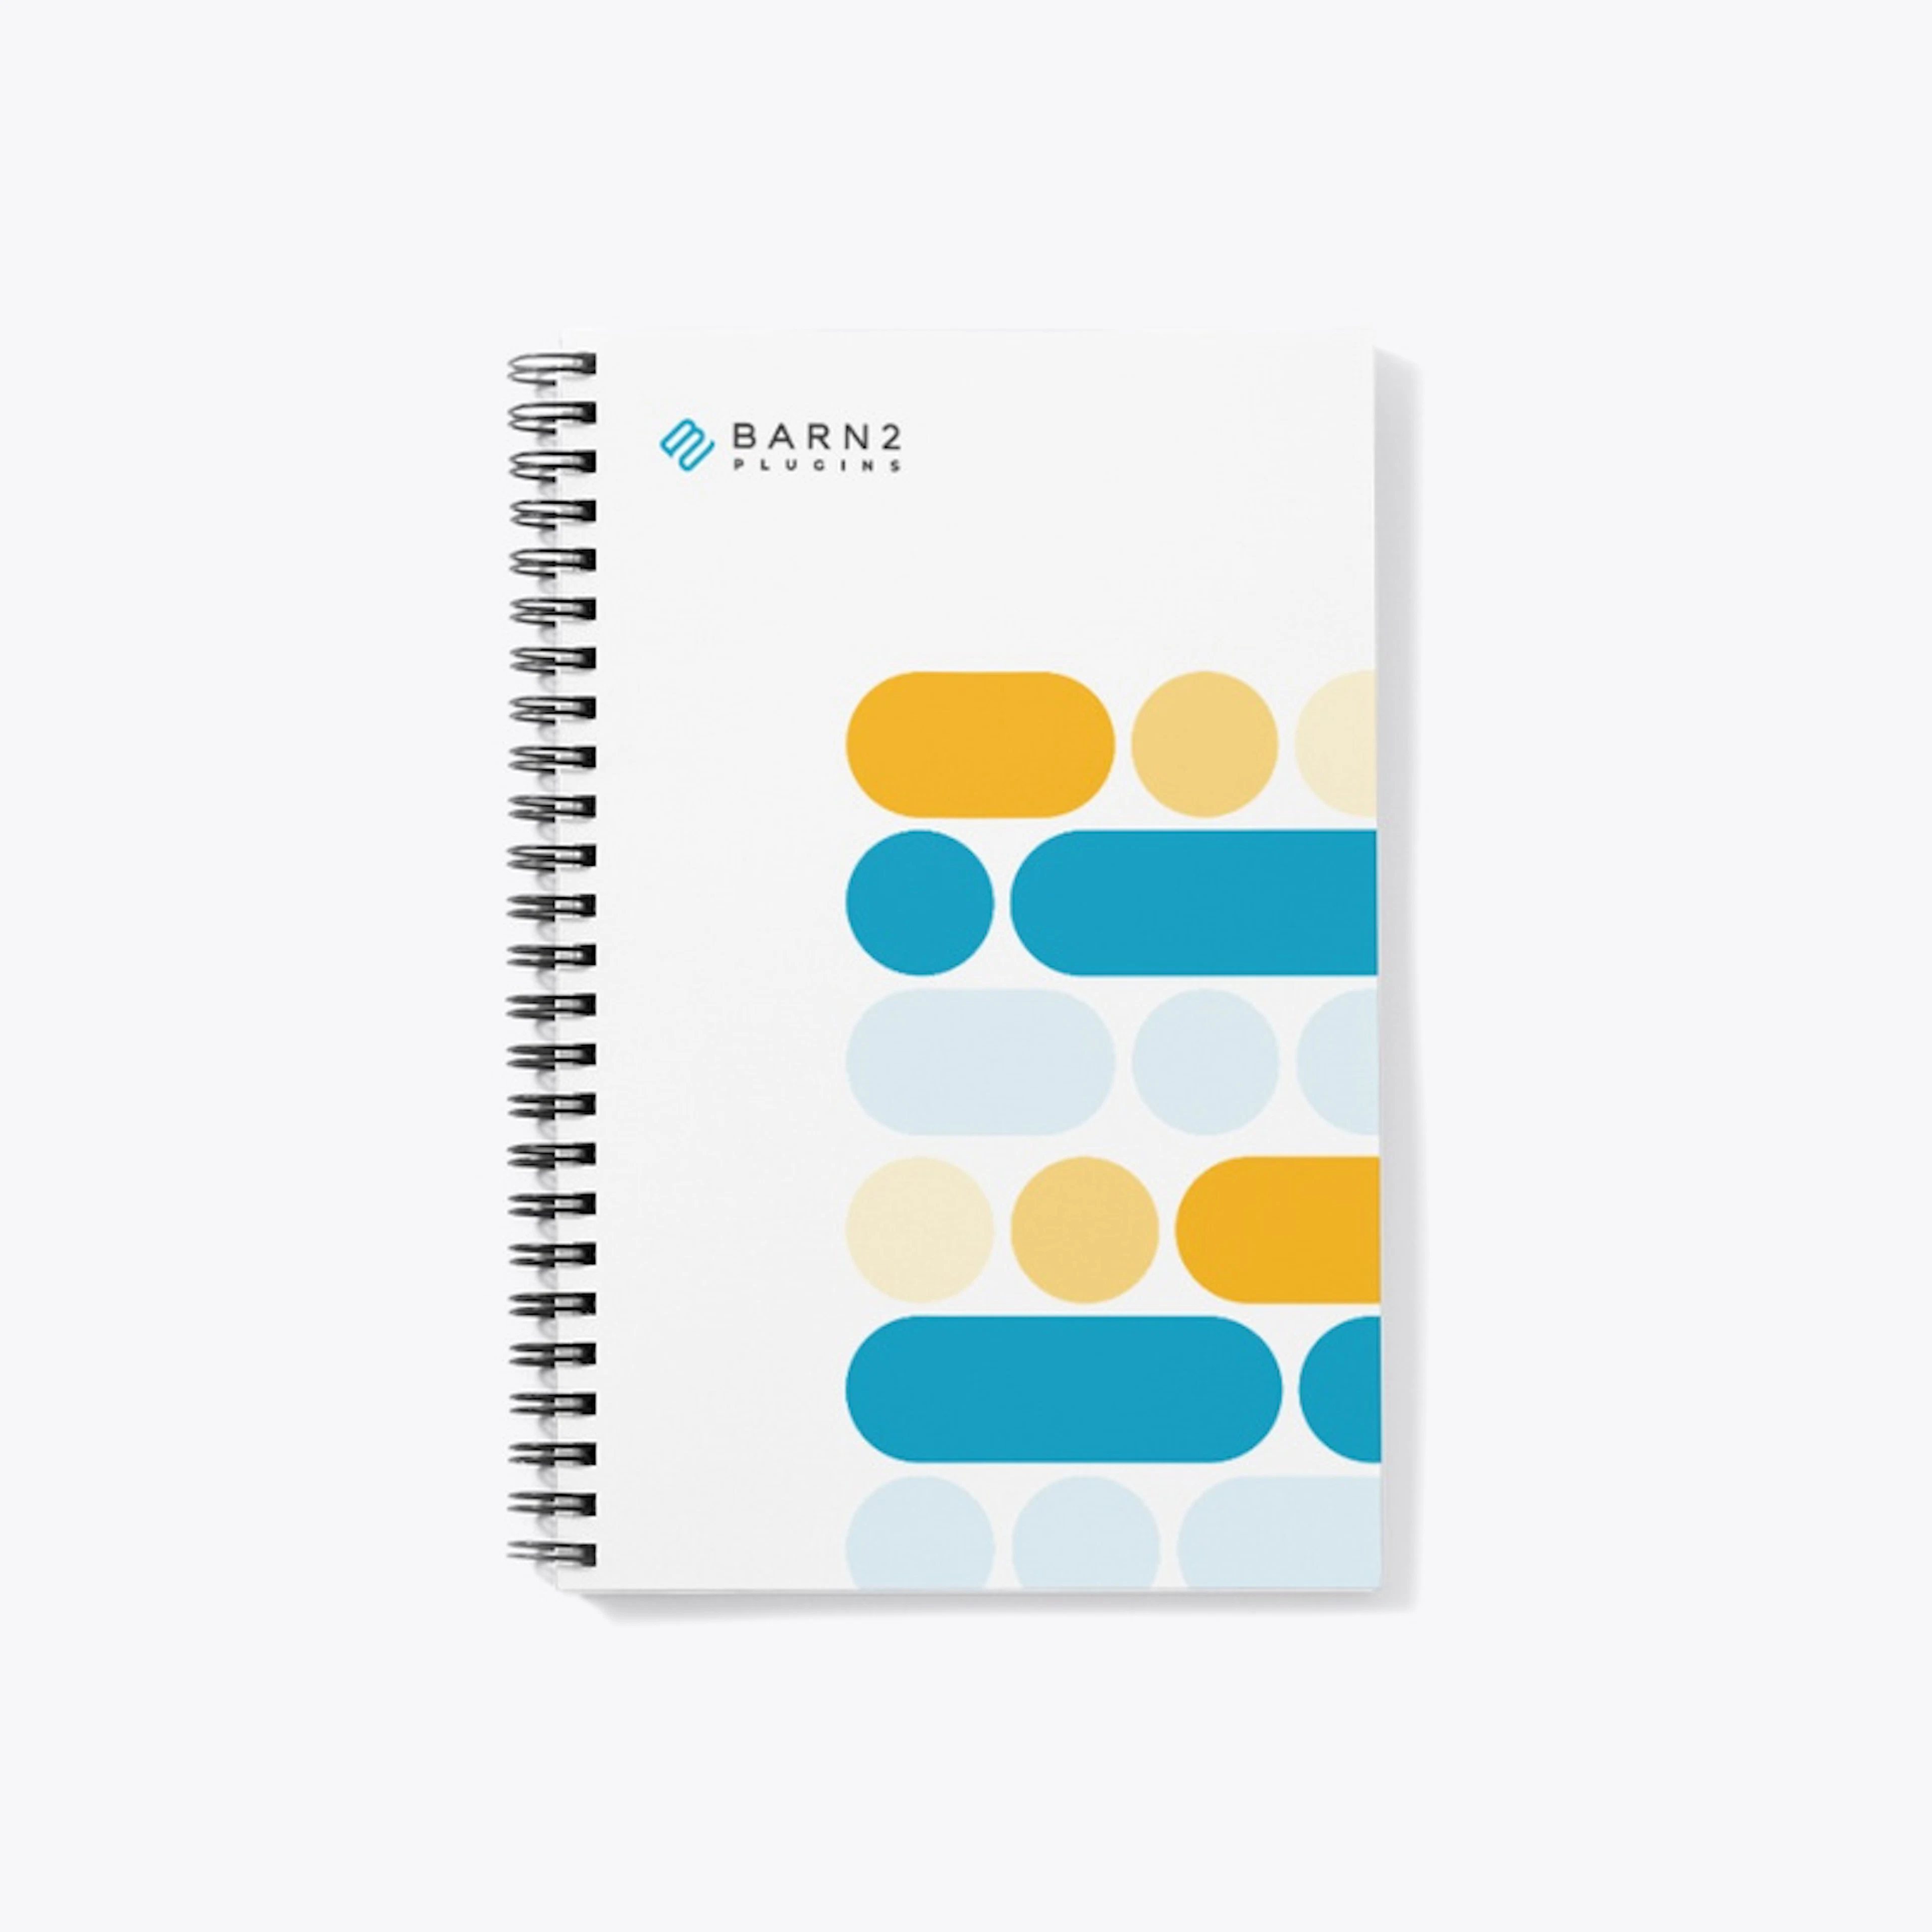 Barn2 Notebook - Dots